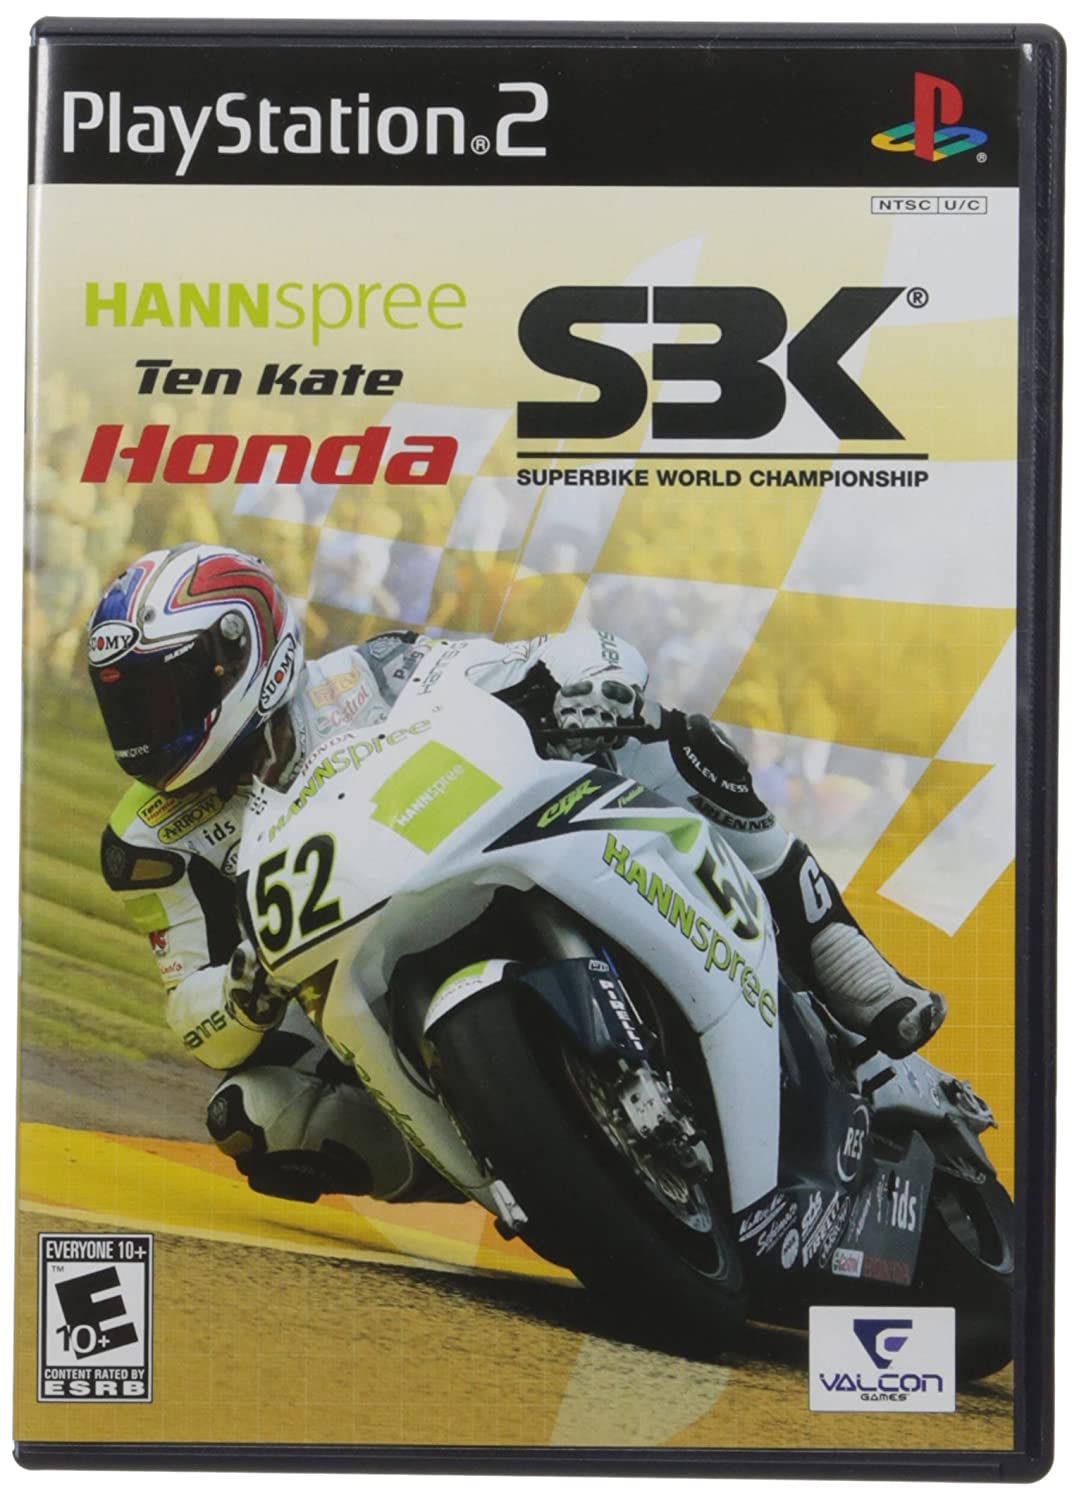 Hannspree Ten Kate Honda SBK Superbike World Championship - Darkside Records